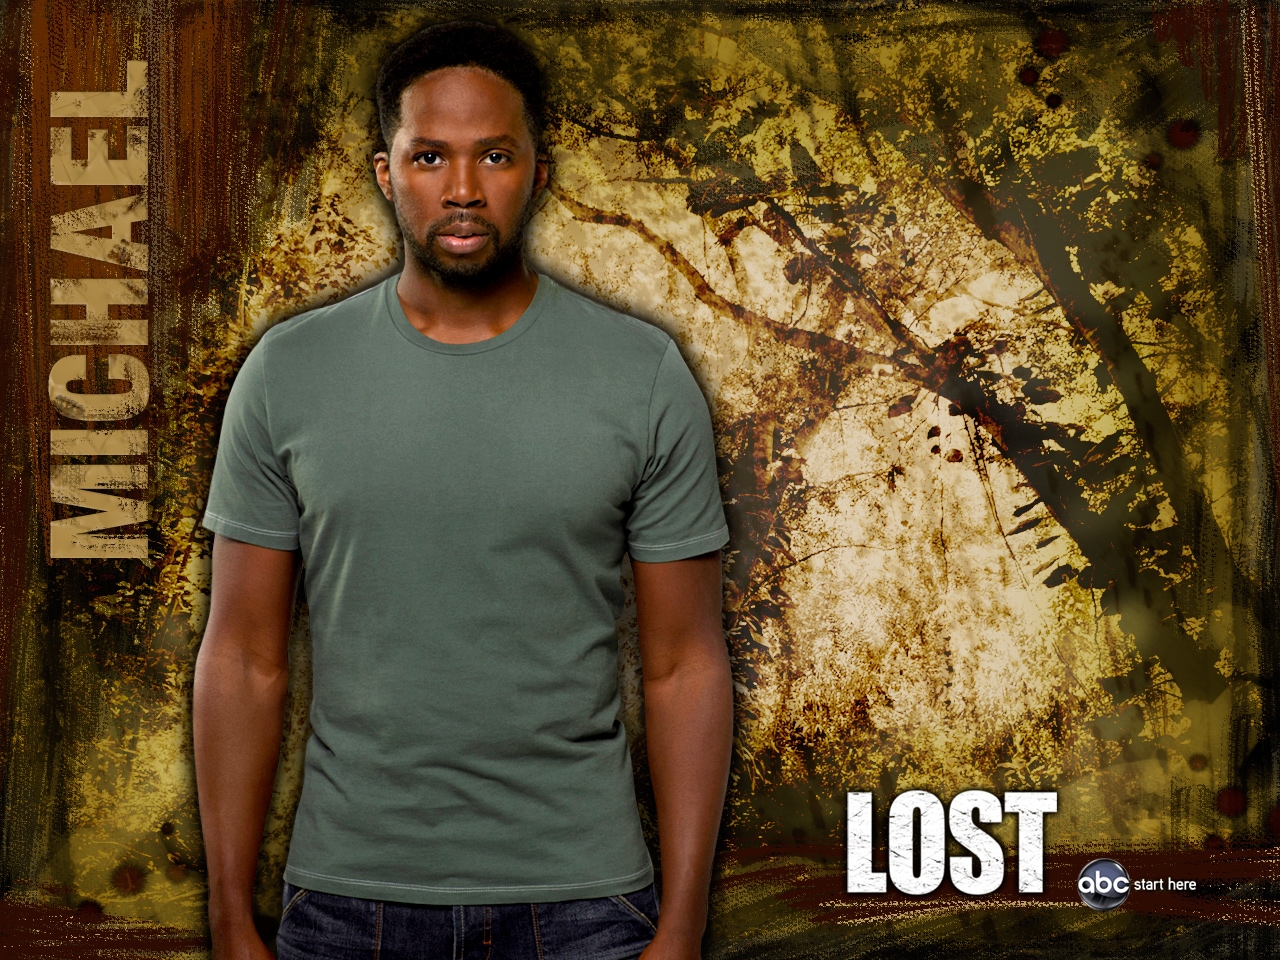 Lost:The Complete Fourth Season